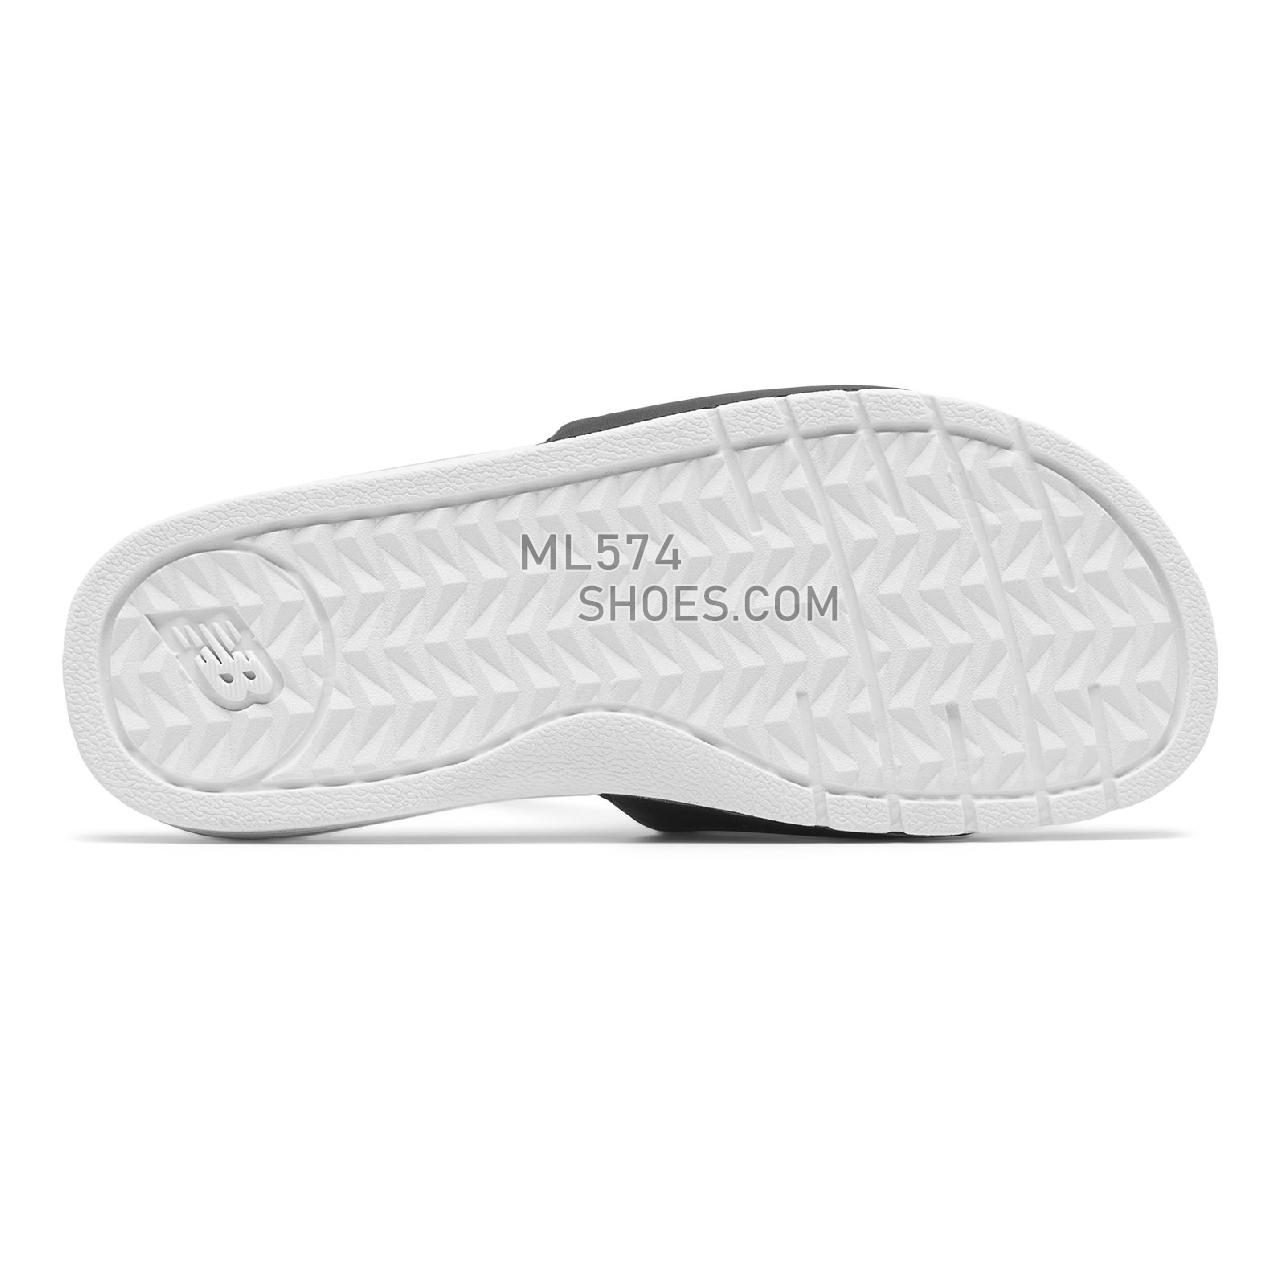 New Balance NB Pro Slide - Women's 3068 - Sandals Black with White - W3068BKW